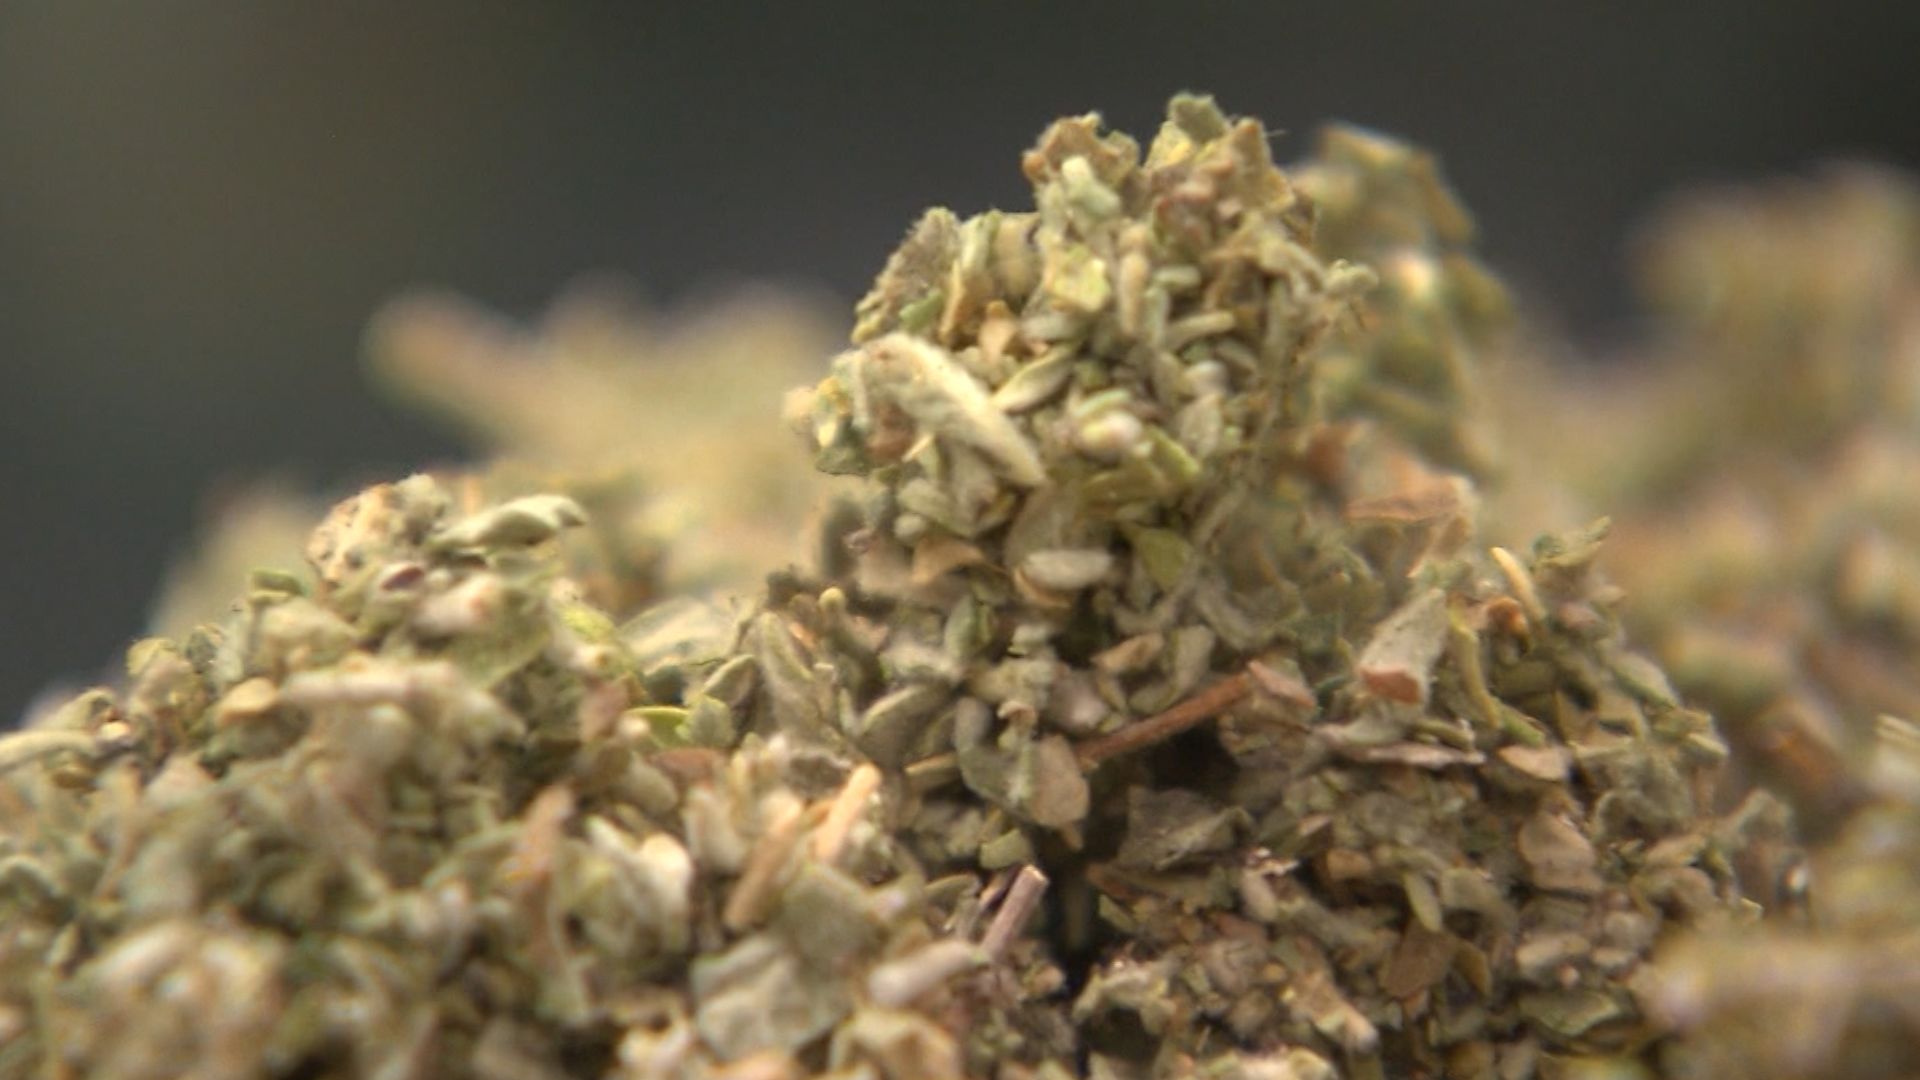 Death linked to fake marijuana in Illinois